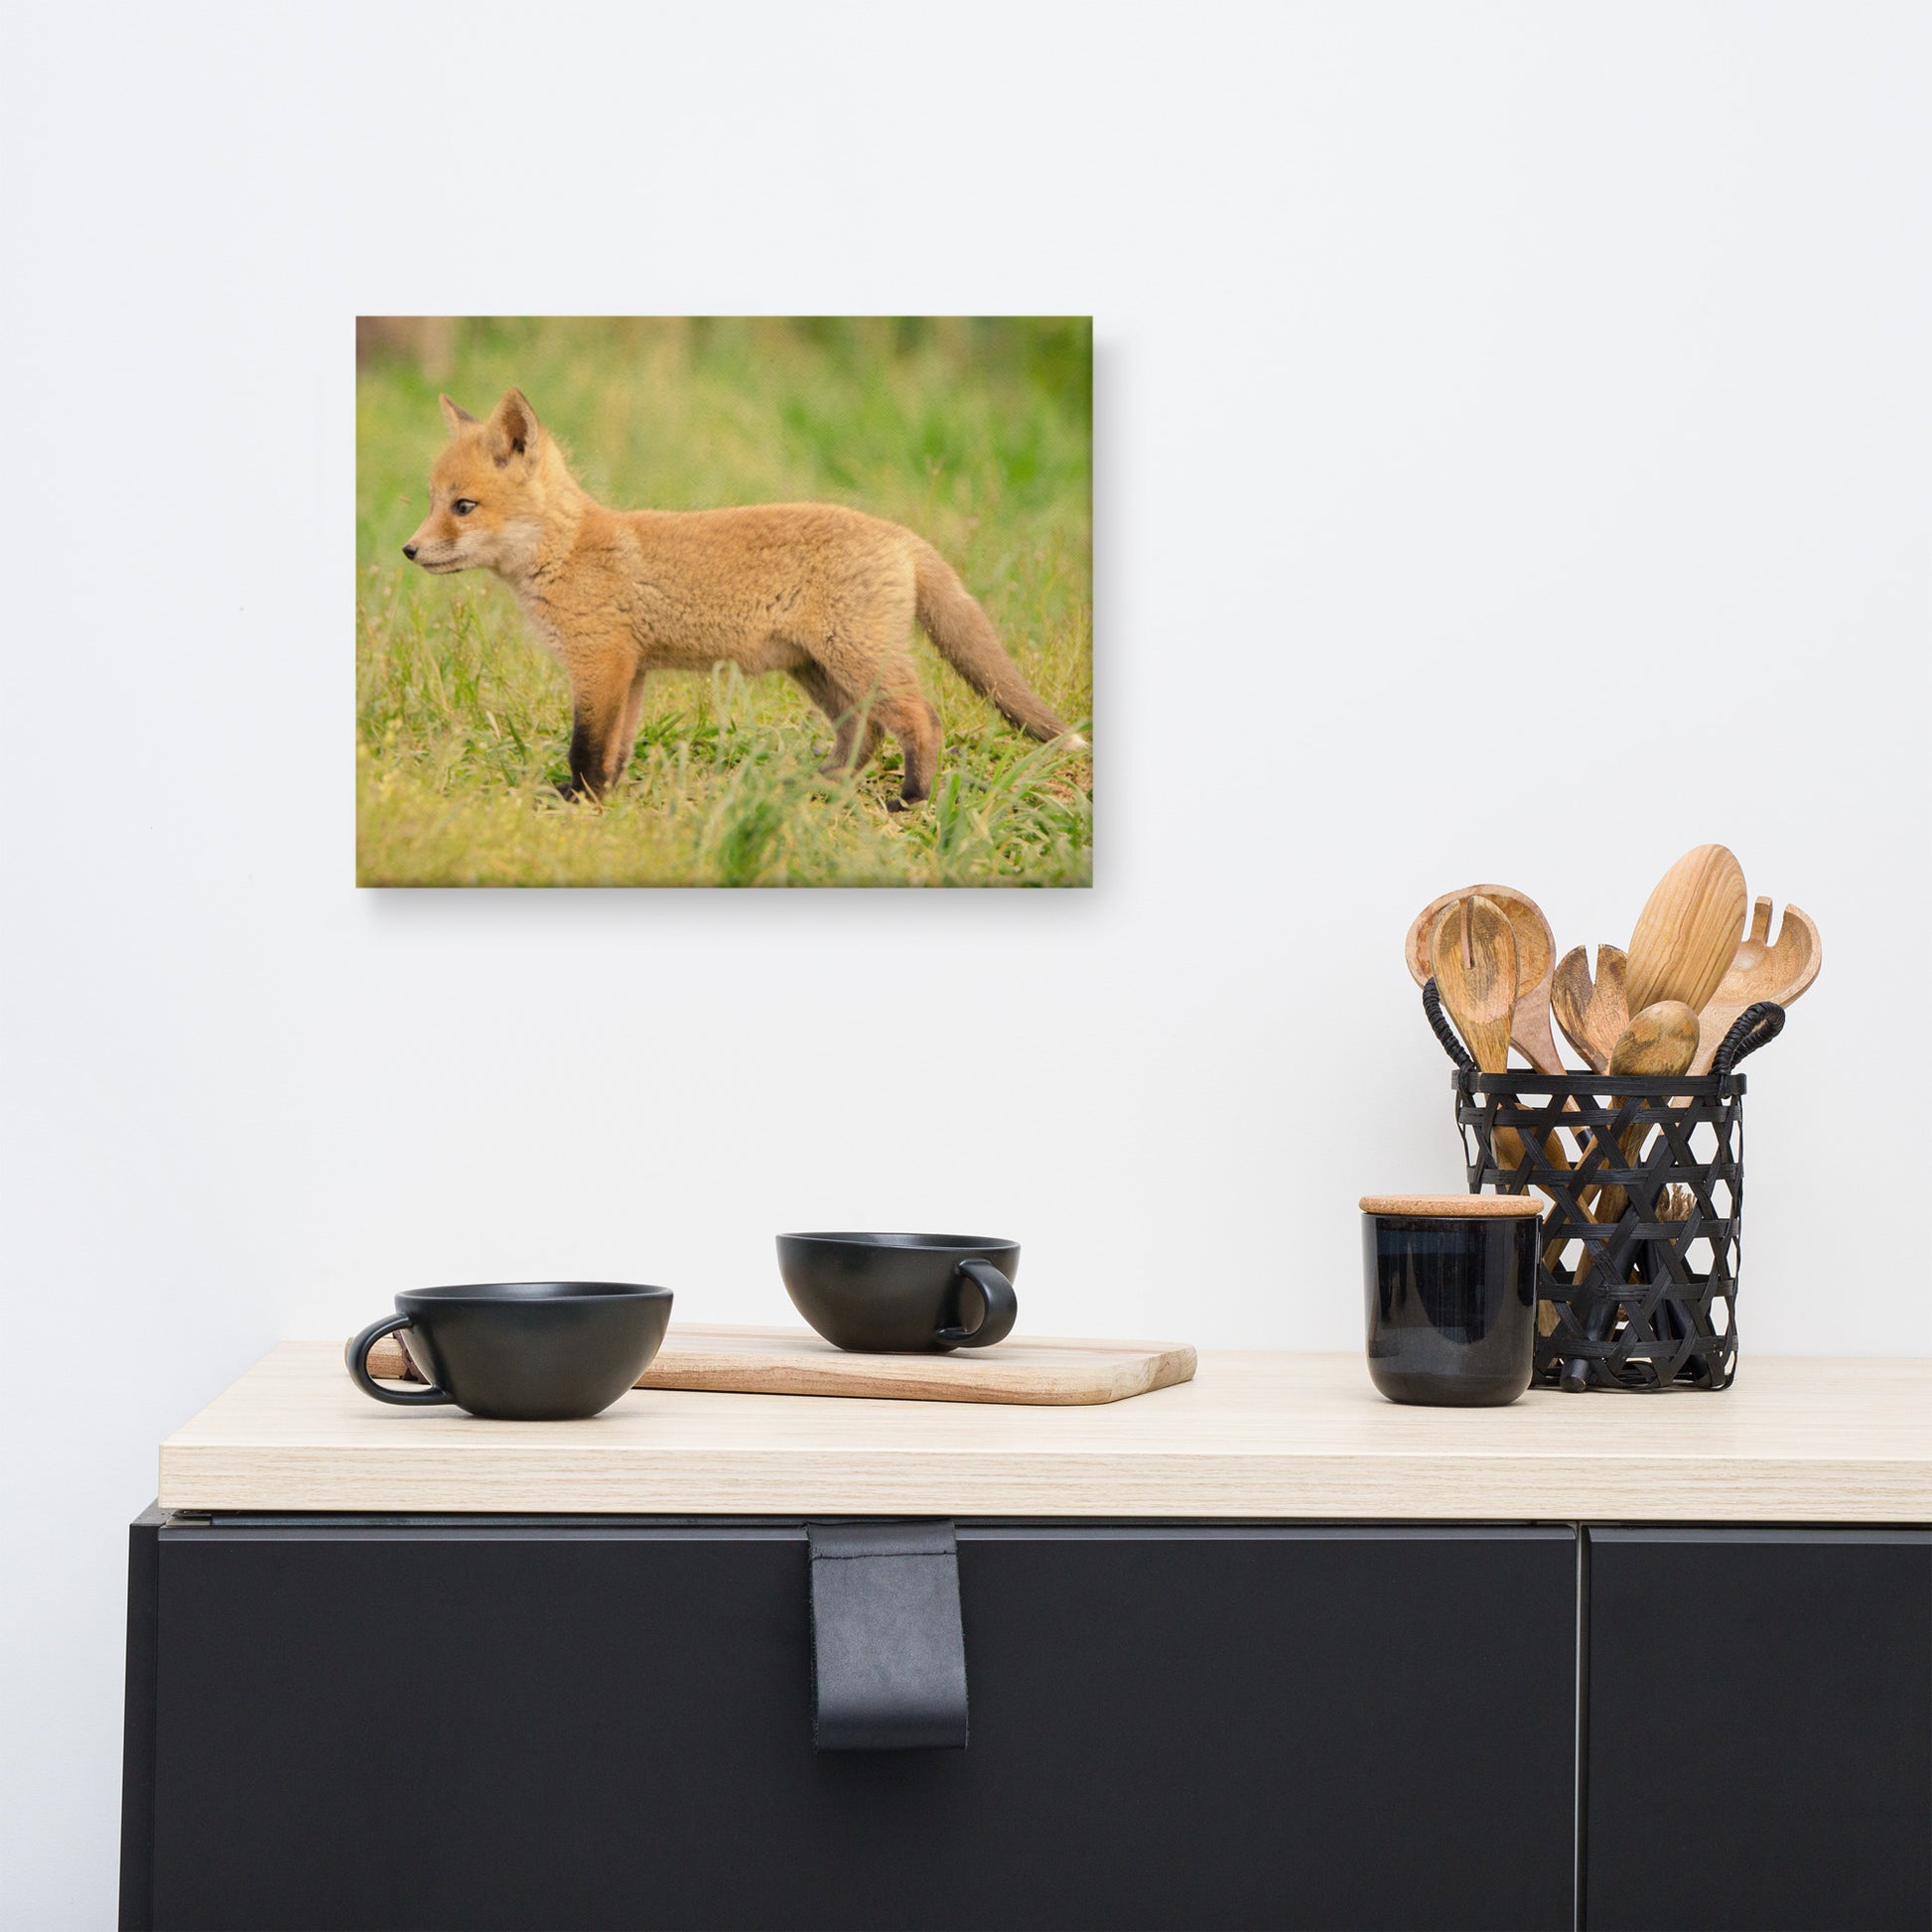 Simple Nursery Wall Art: Fox Pup In Meadow - Wildlife / Animal / Nature Photograph Canvas Wall Art Print - Artwork - Wall Decor